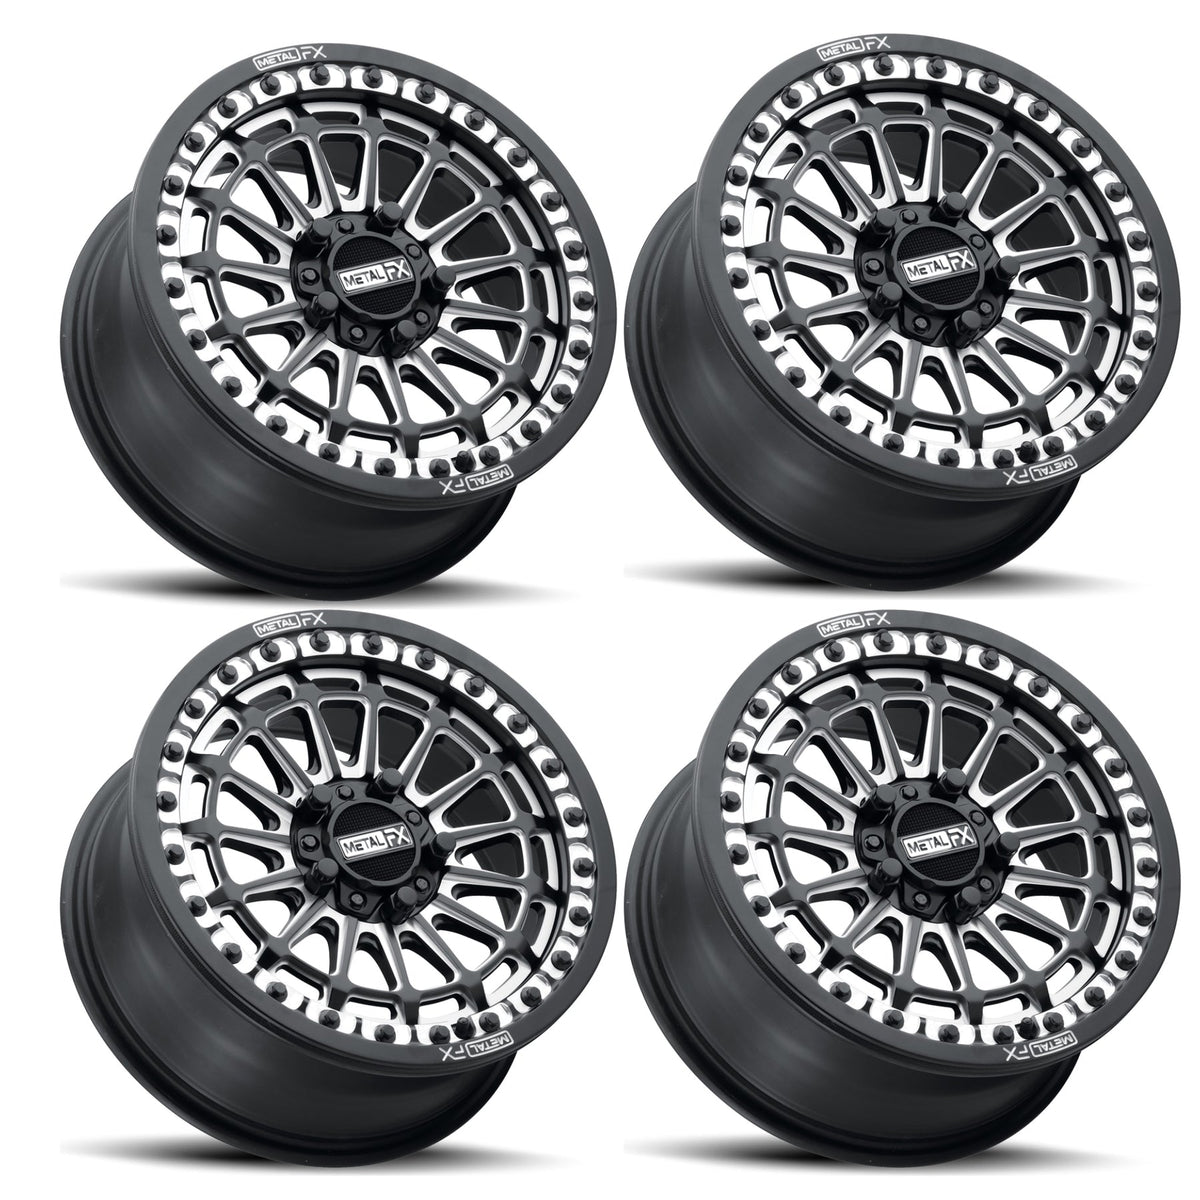 DELTA R BEADLOCK | SATIN BLACK CONTRAST CUT | UTV WHEEL KIT-Wheels-Metal FX Offroad-5x4.5 (5x114.3) | Polaris Pro R / Turbo R-Dirt/Street - 15x7 (5+2) - (All 4-No Spare-Black Market UTV